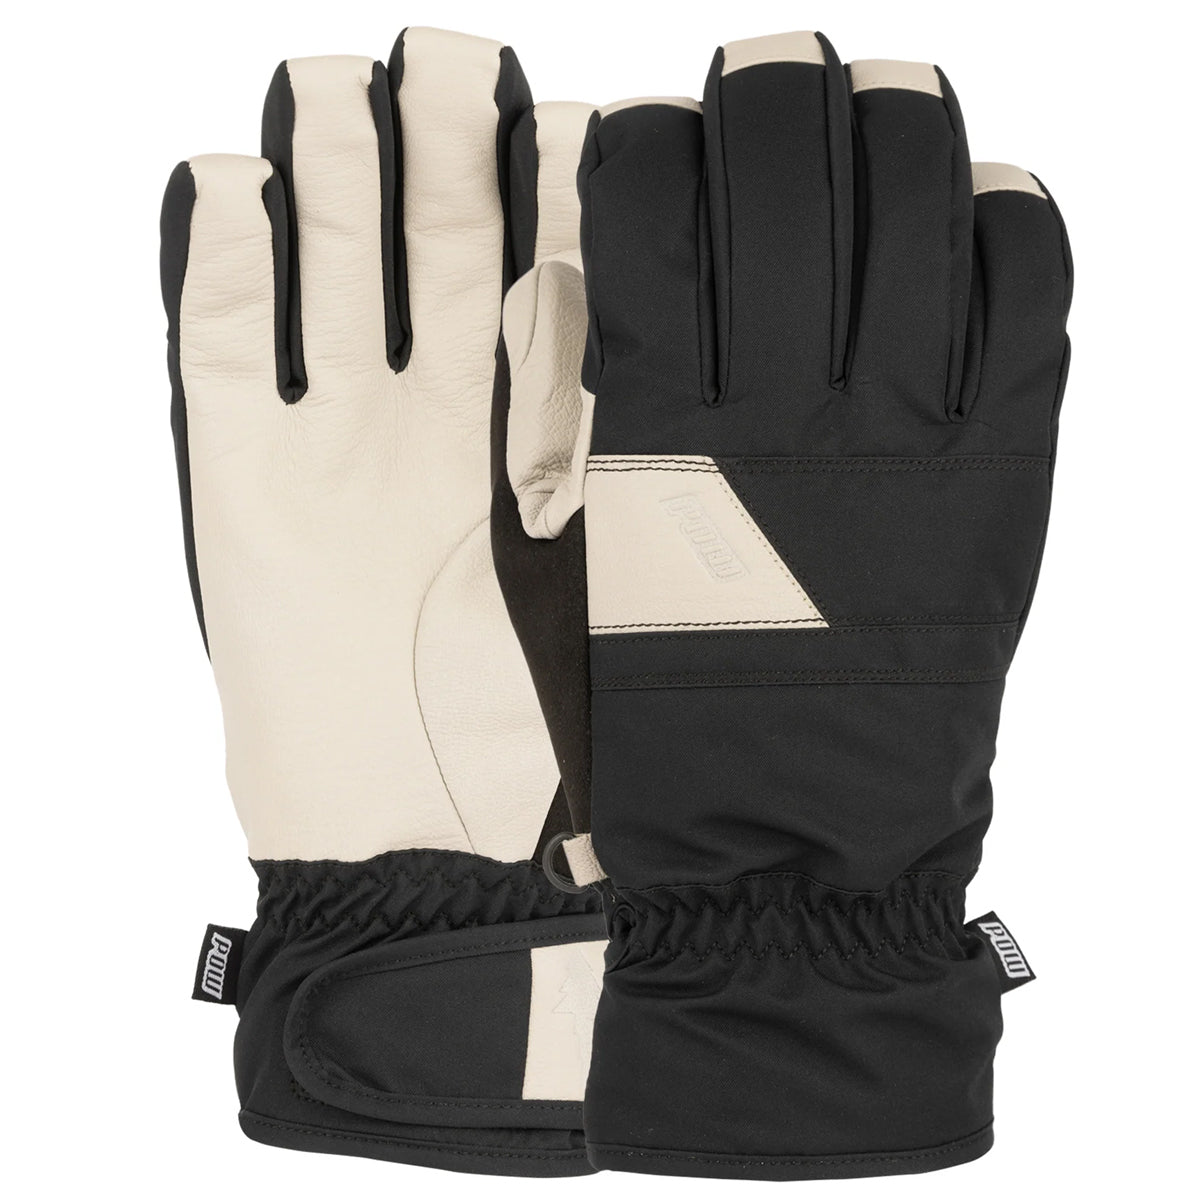 POW Verdict Glove Snowboard Gloves - Cold Smoke image 1